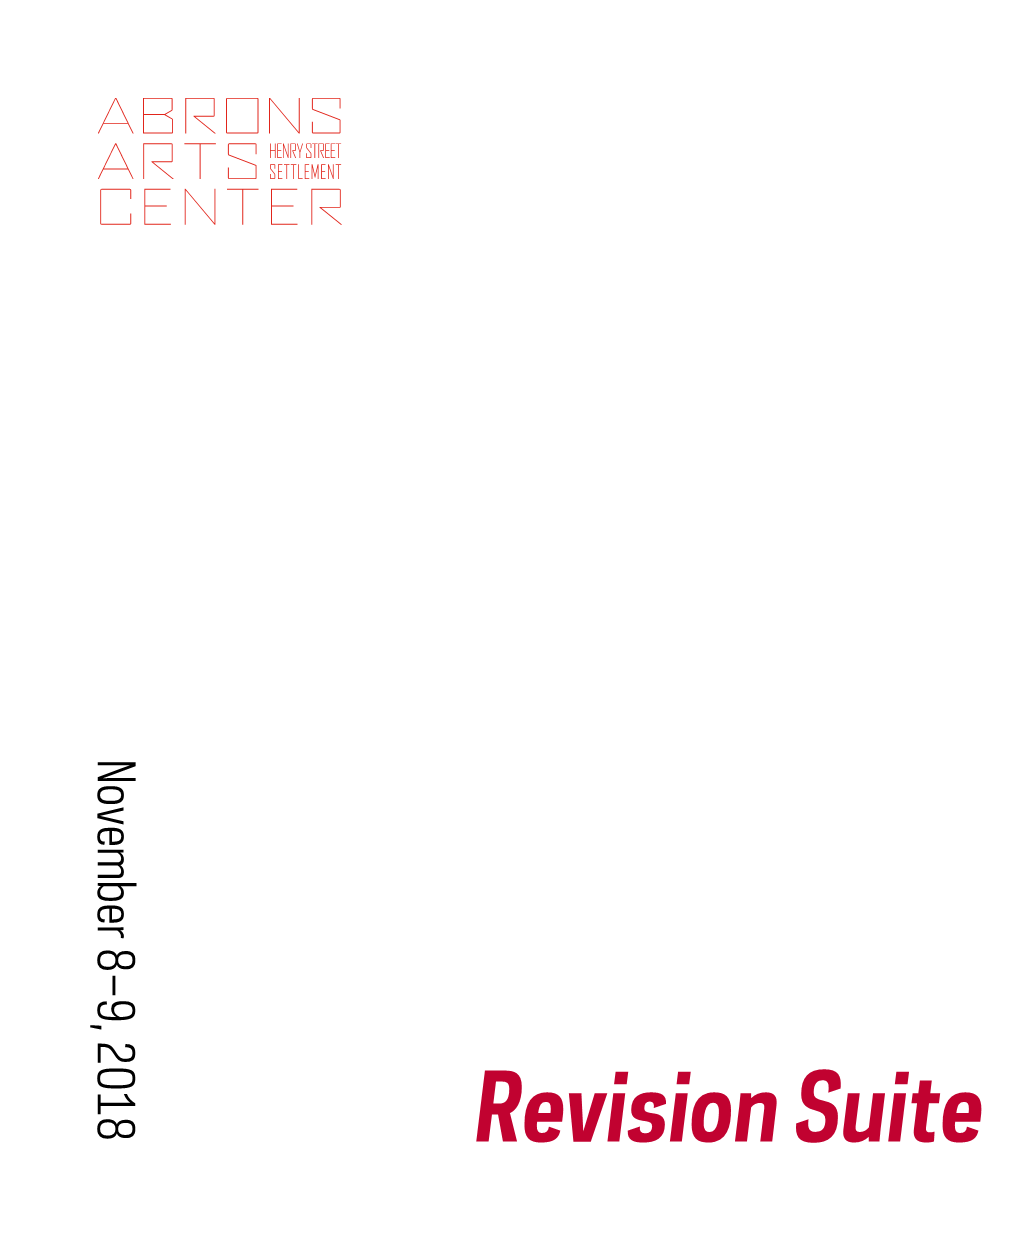 View Program for Revision Suite